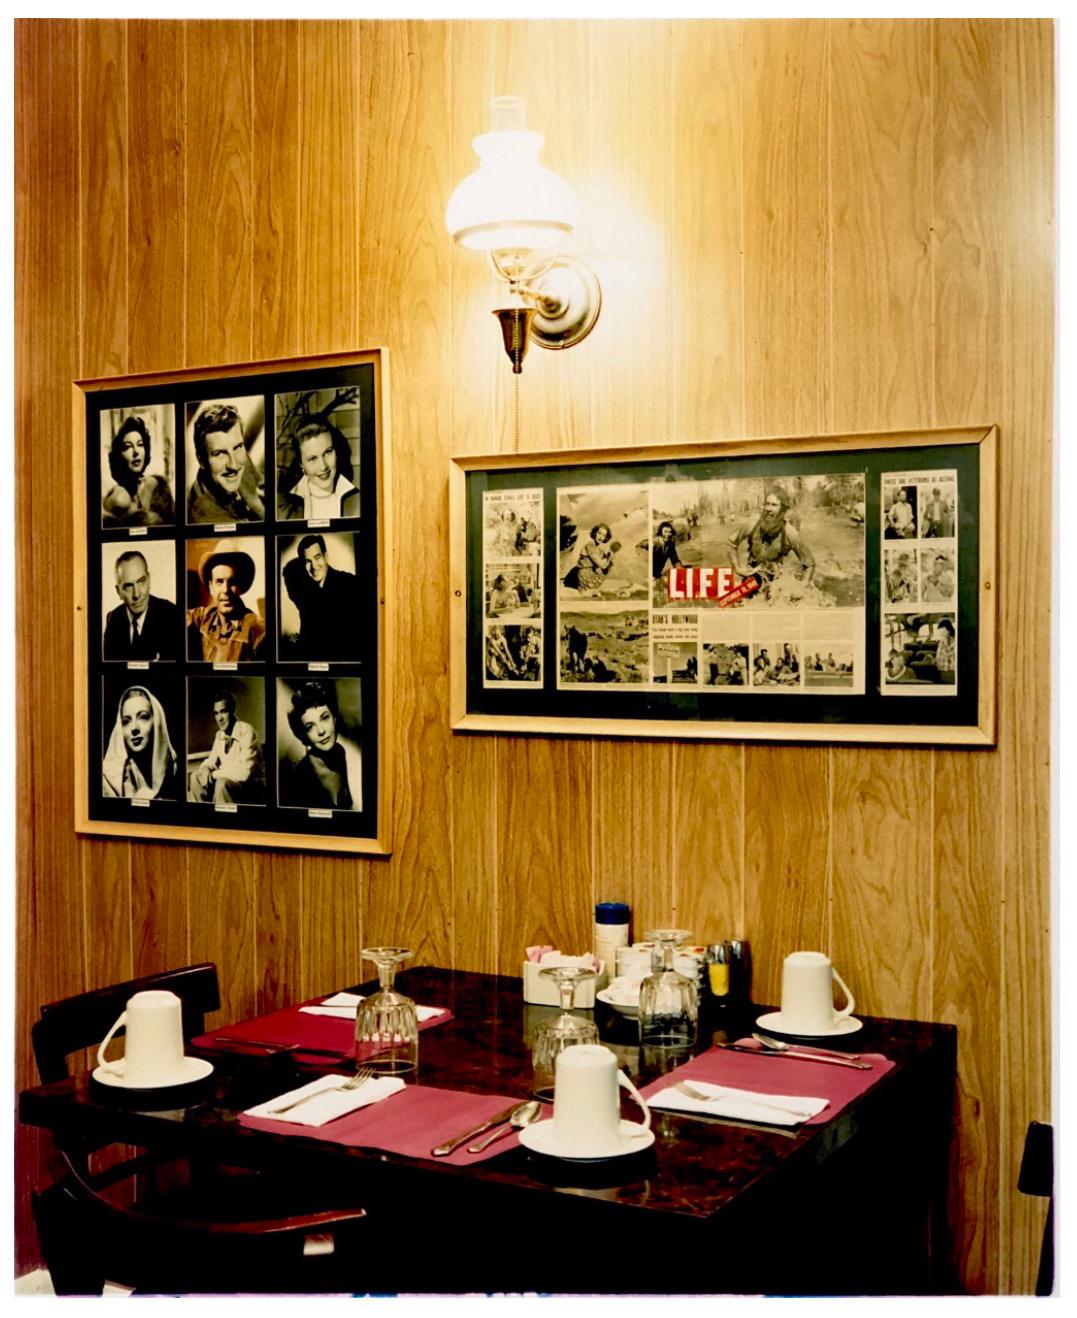 Dining Room, Kanab - Mid-century American interior color photography